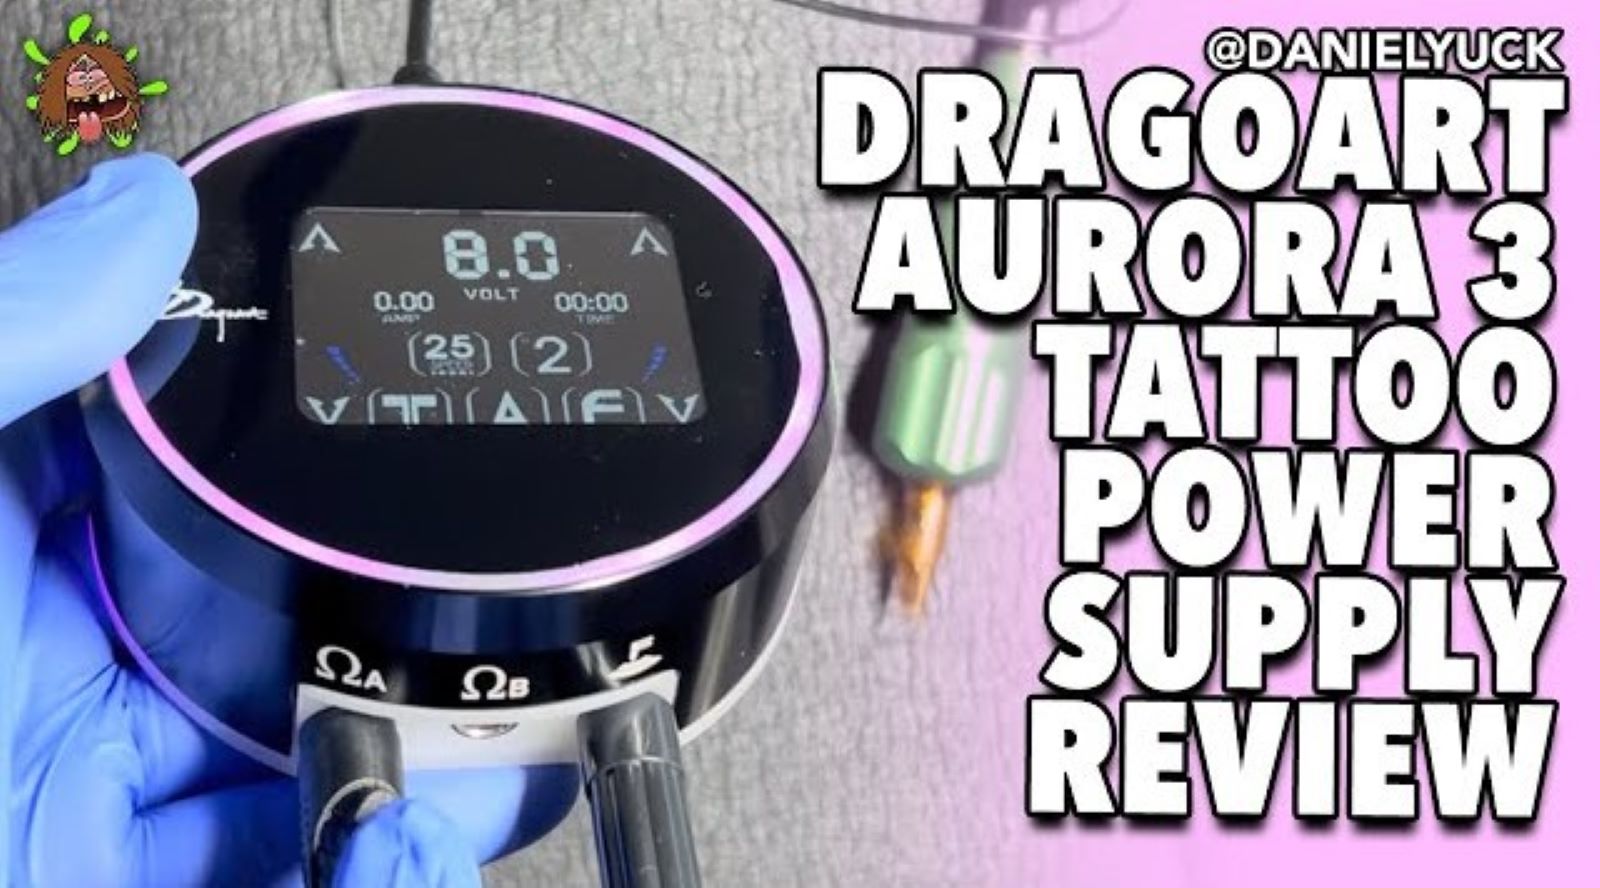 Load video: Youtuber Daniel Yuck reviewed Dragoart Aurora 3 Tattoo Power Supply